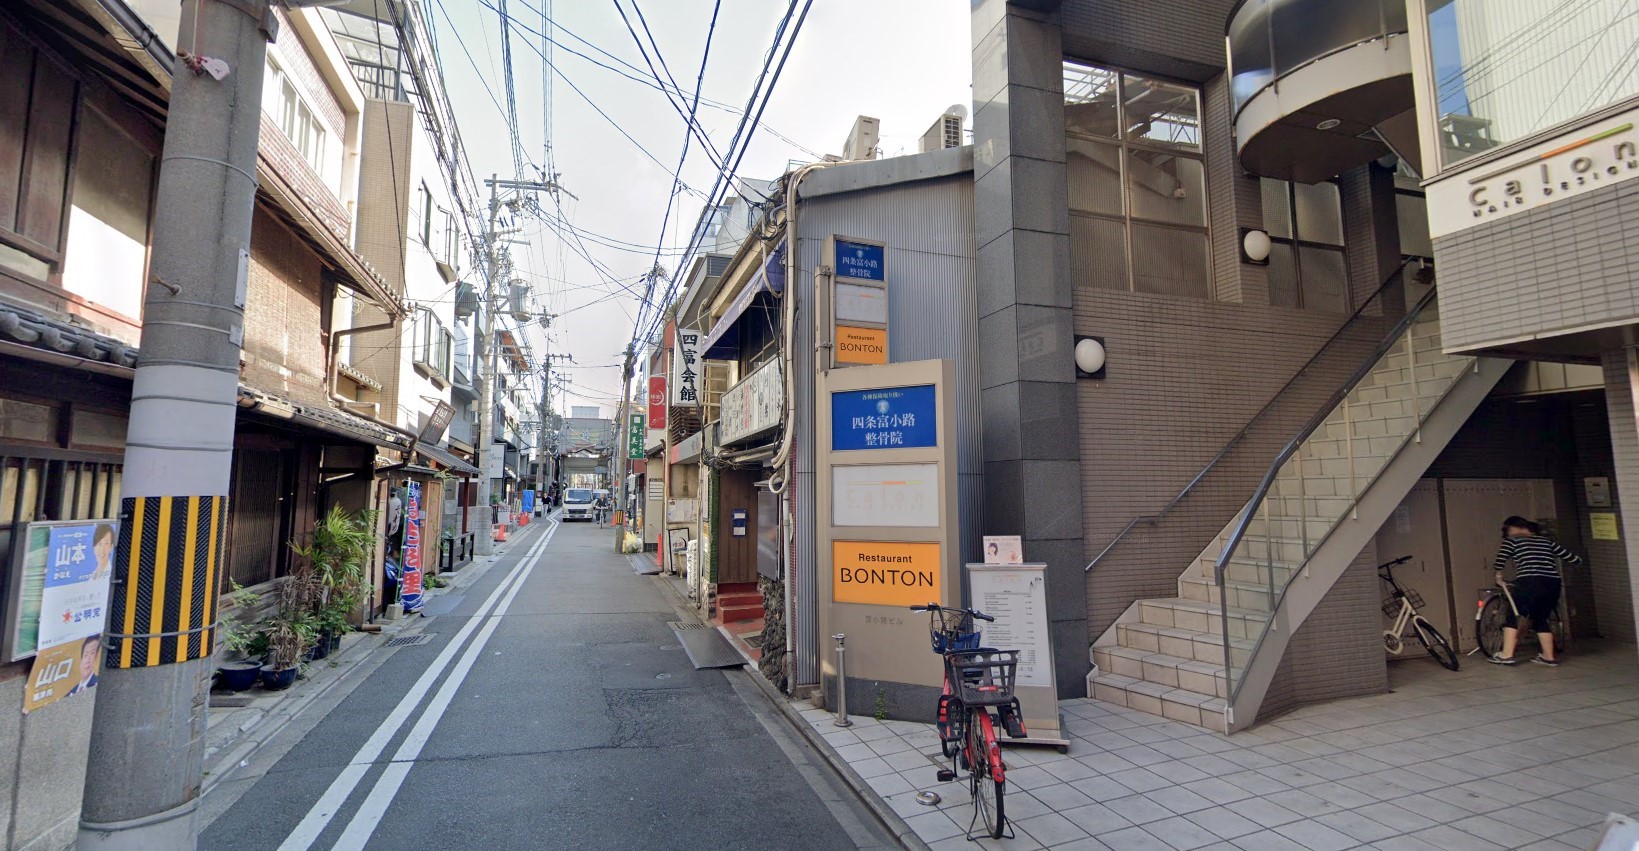 Photograph of a modern Japanese city street.